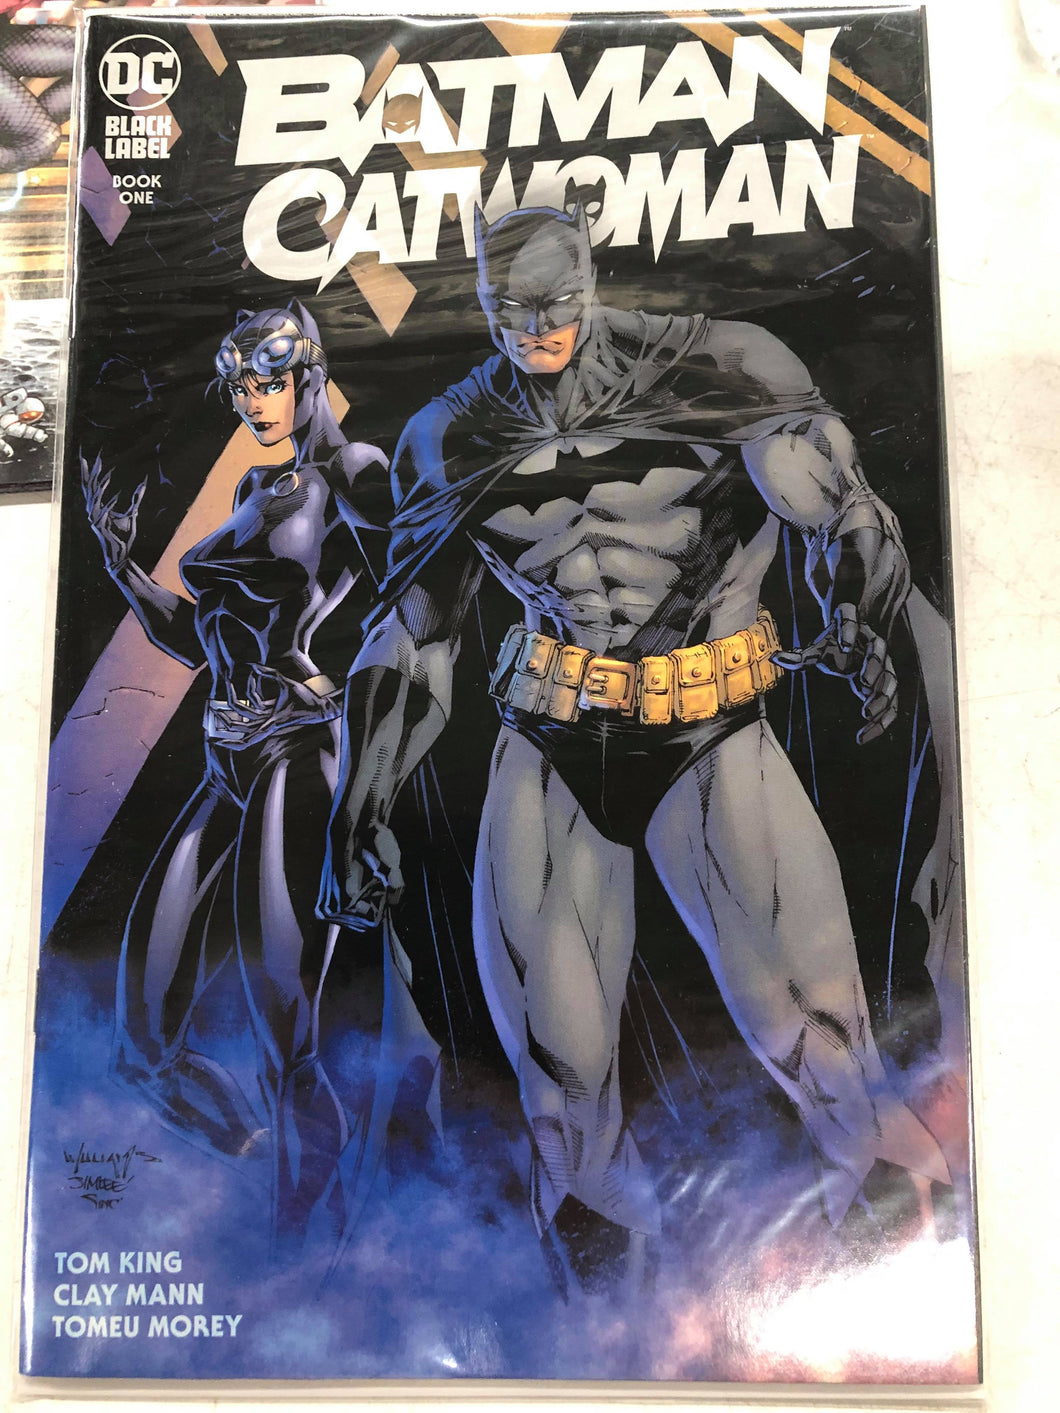 BATMAN CATWOMAN#1 Scott Williams, Jim Lee, and Alex Sinclair Cover